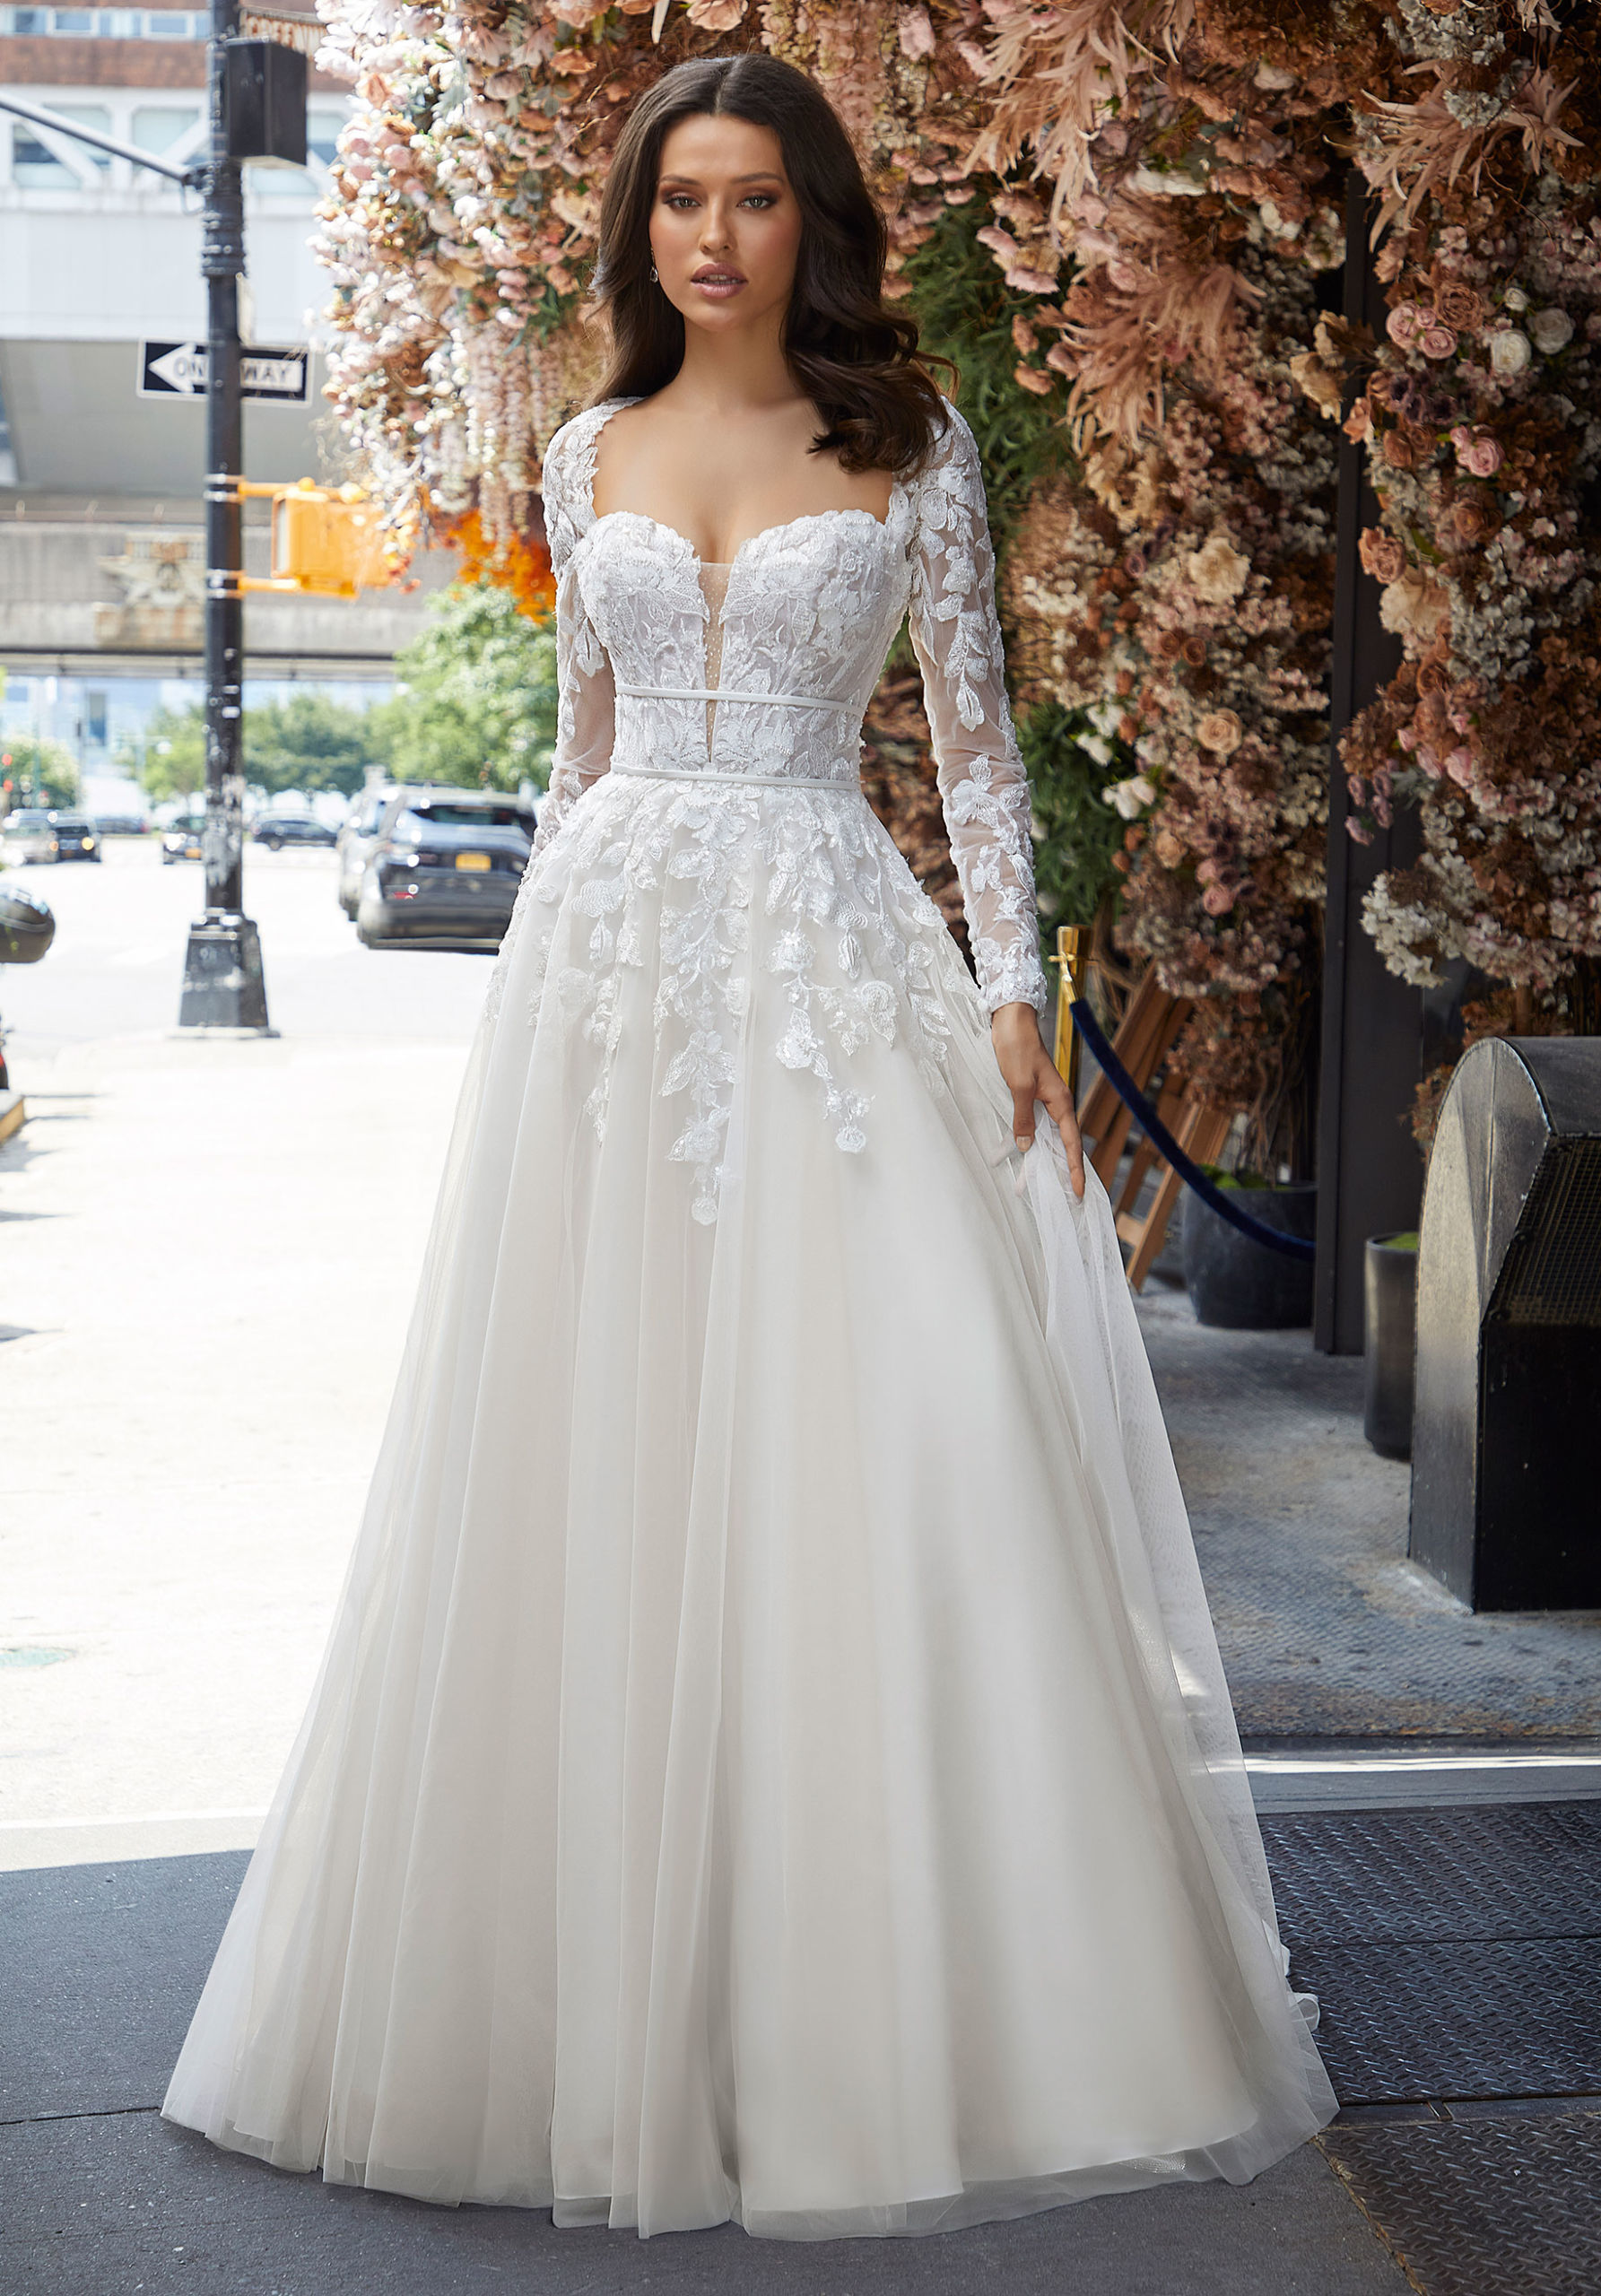 Non Traditional Empire Waist Wedding Dress Ideas – DaVinci Bridal Blog |  DaVinci Bridal Blog